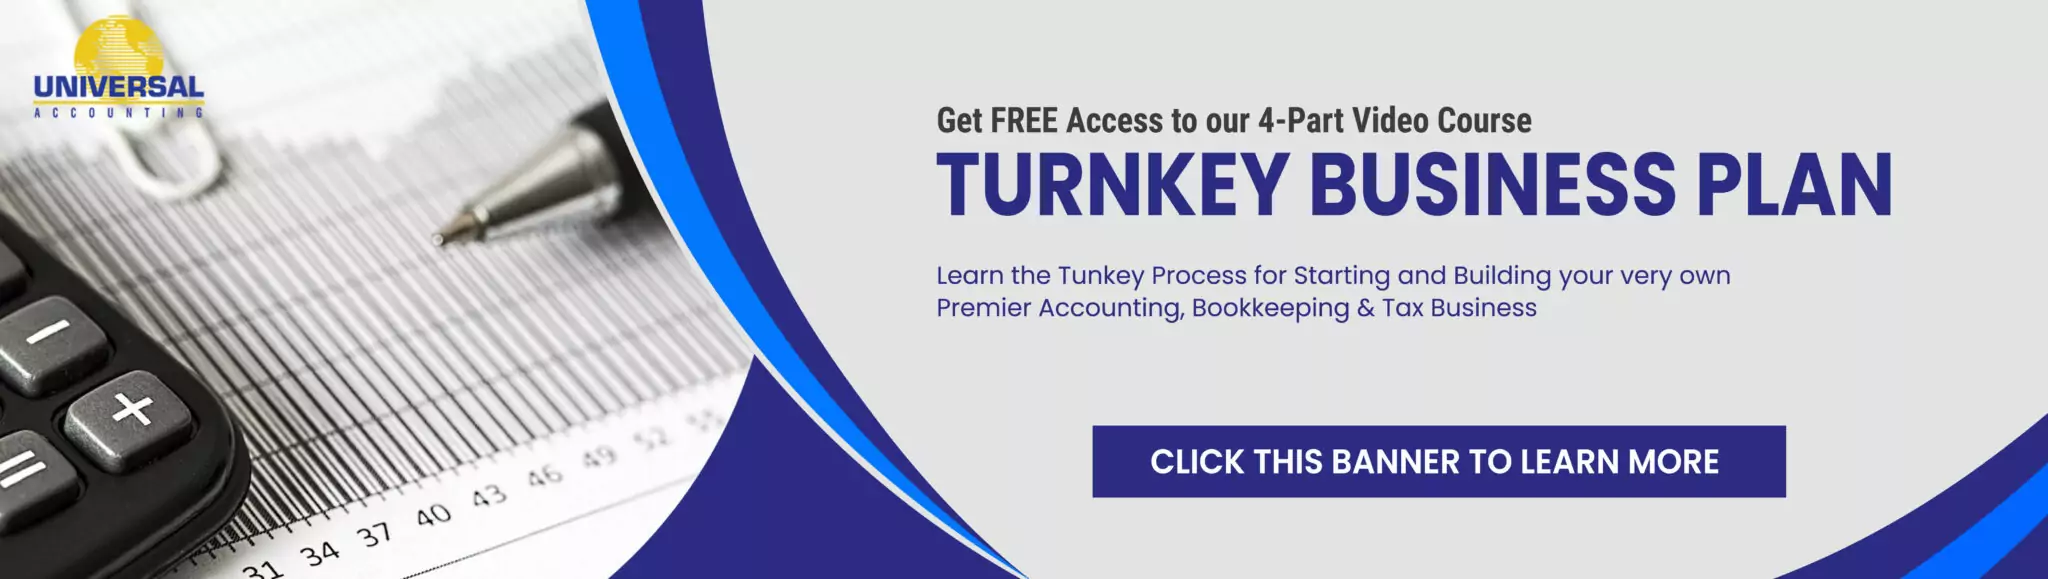 CTA - Turnkey Business Plan